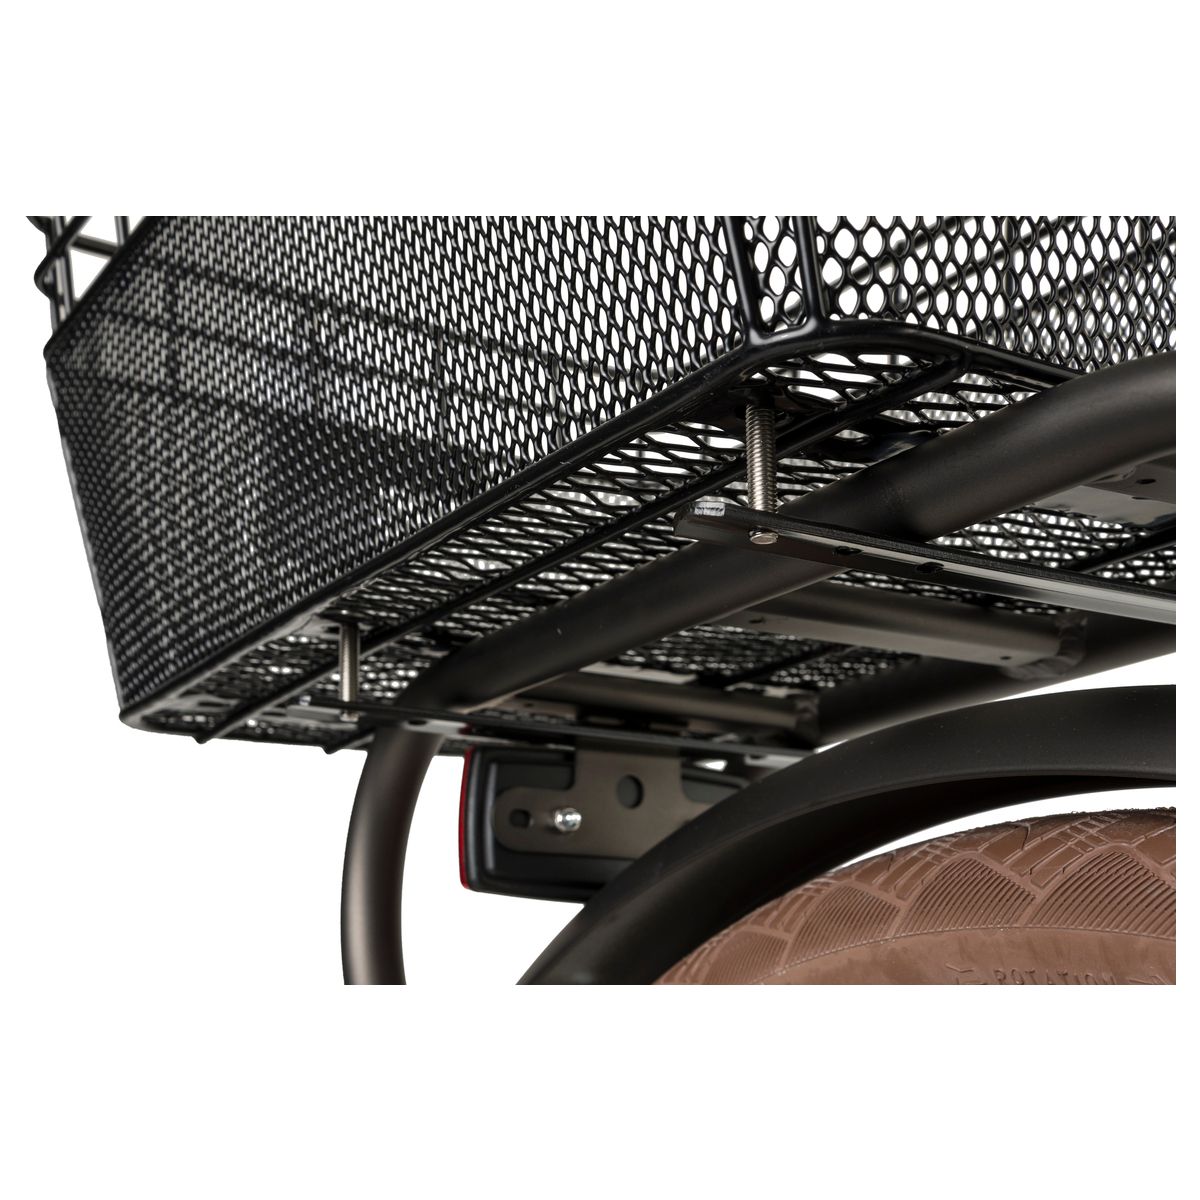 Fastrider Olav Rear Carrier Bike Basket Non-Detachable fit example